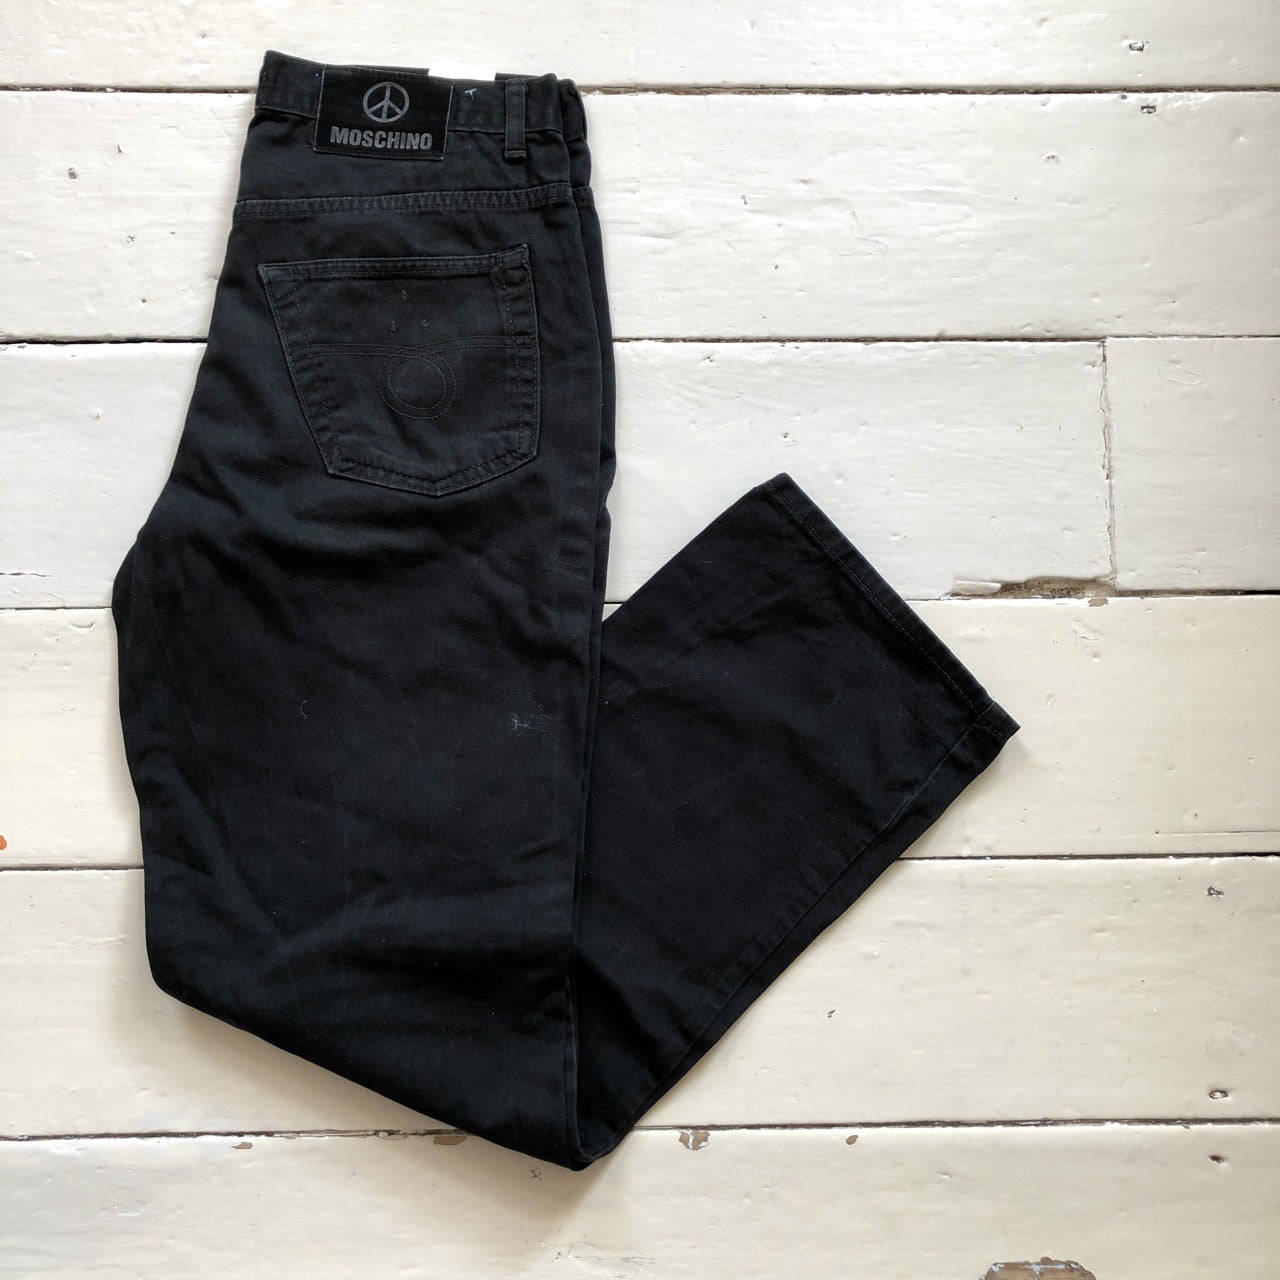 Moschino Vintage Black Jeans (32/30)